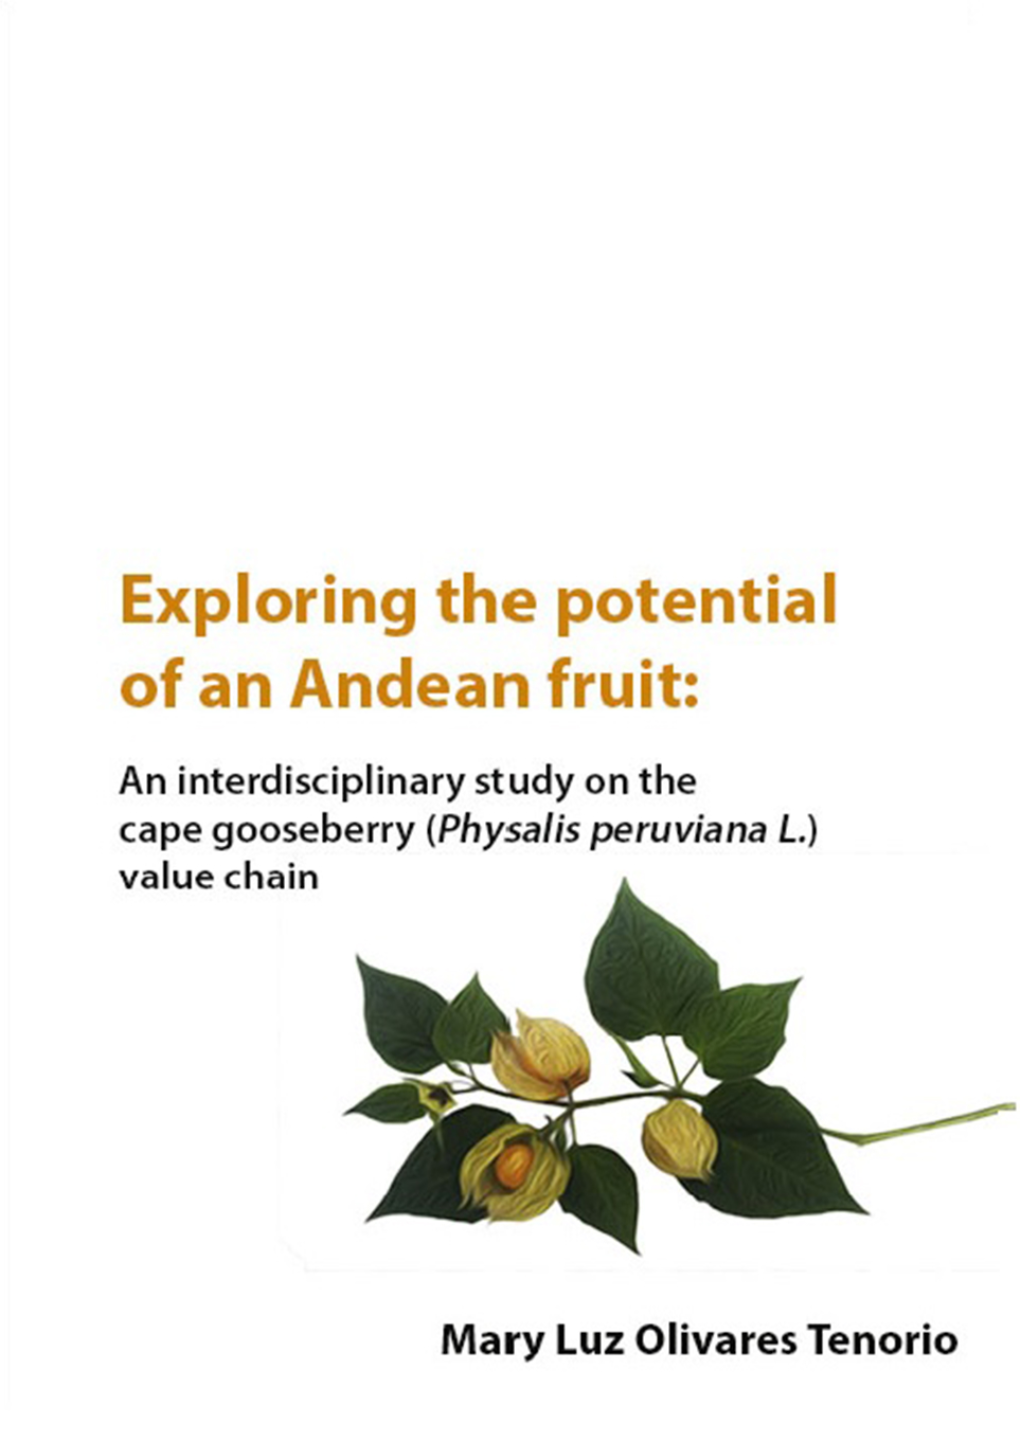 An Interdisciplinary Study on the Cape Gooseberry (Physalis Peruviana L.) Value Chain